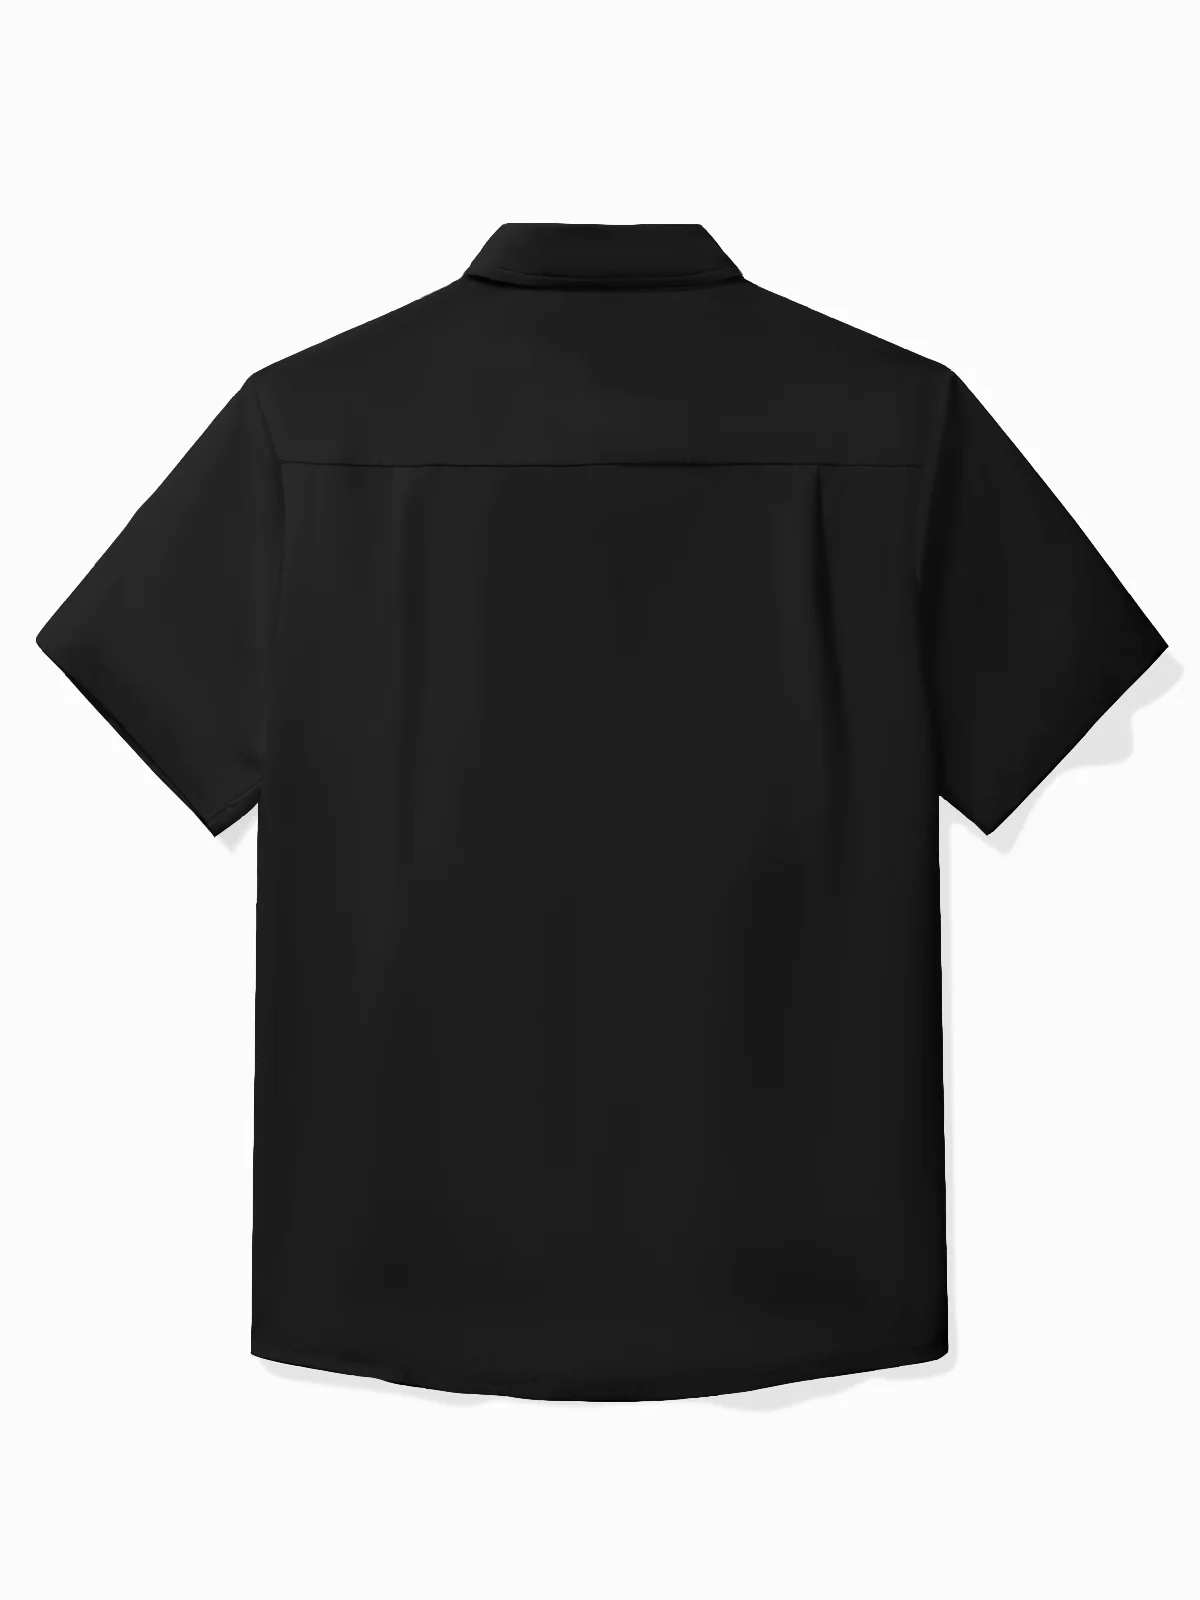 Royaura® 50's Vintage Bowling Shirt TIKI Totem Stretch Quick Dry Pocket Camp Shirt Big Tall